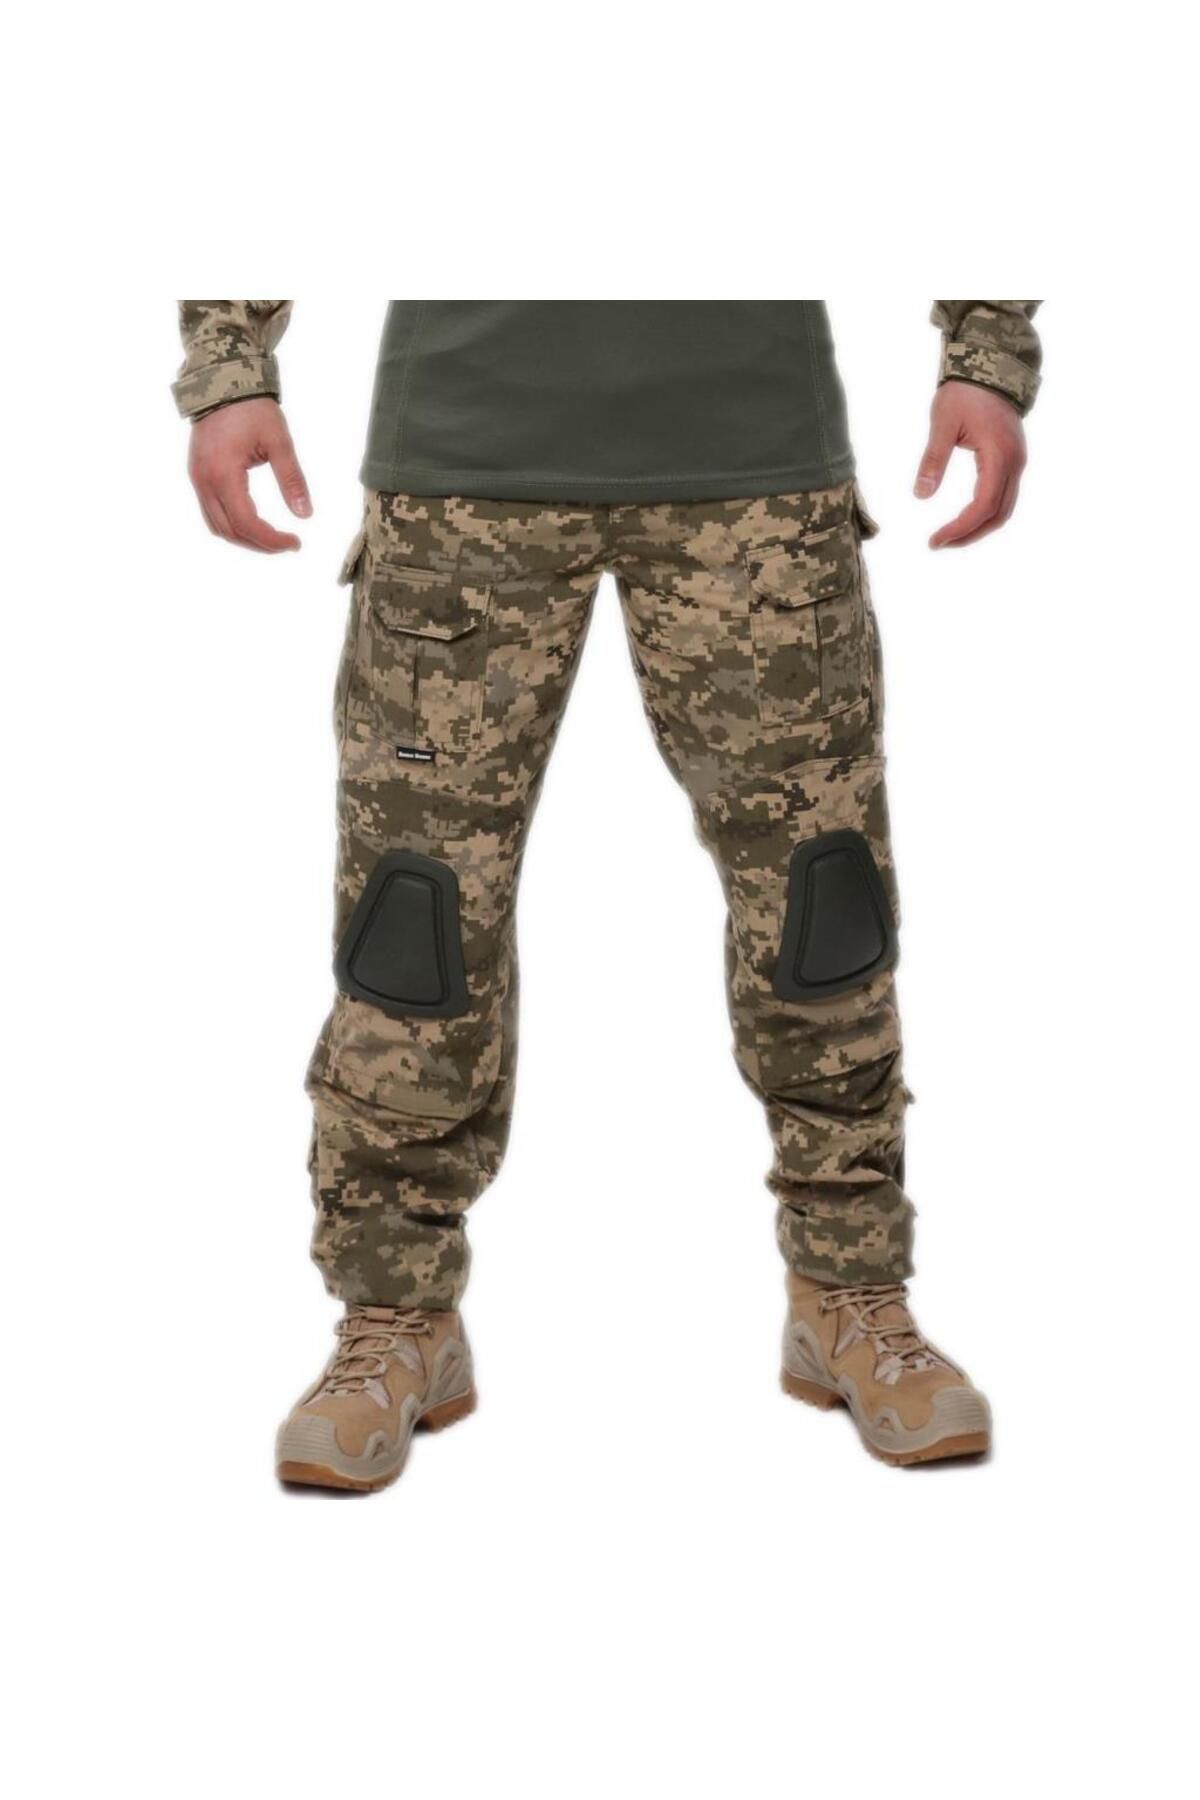 SİNGLE SWORD Dizlikli Kamuflaj Tactical Erkek Pantolon - Outdoor Taktik Pantolon